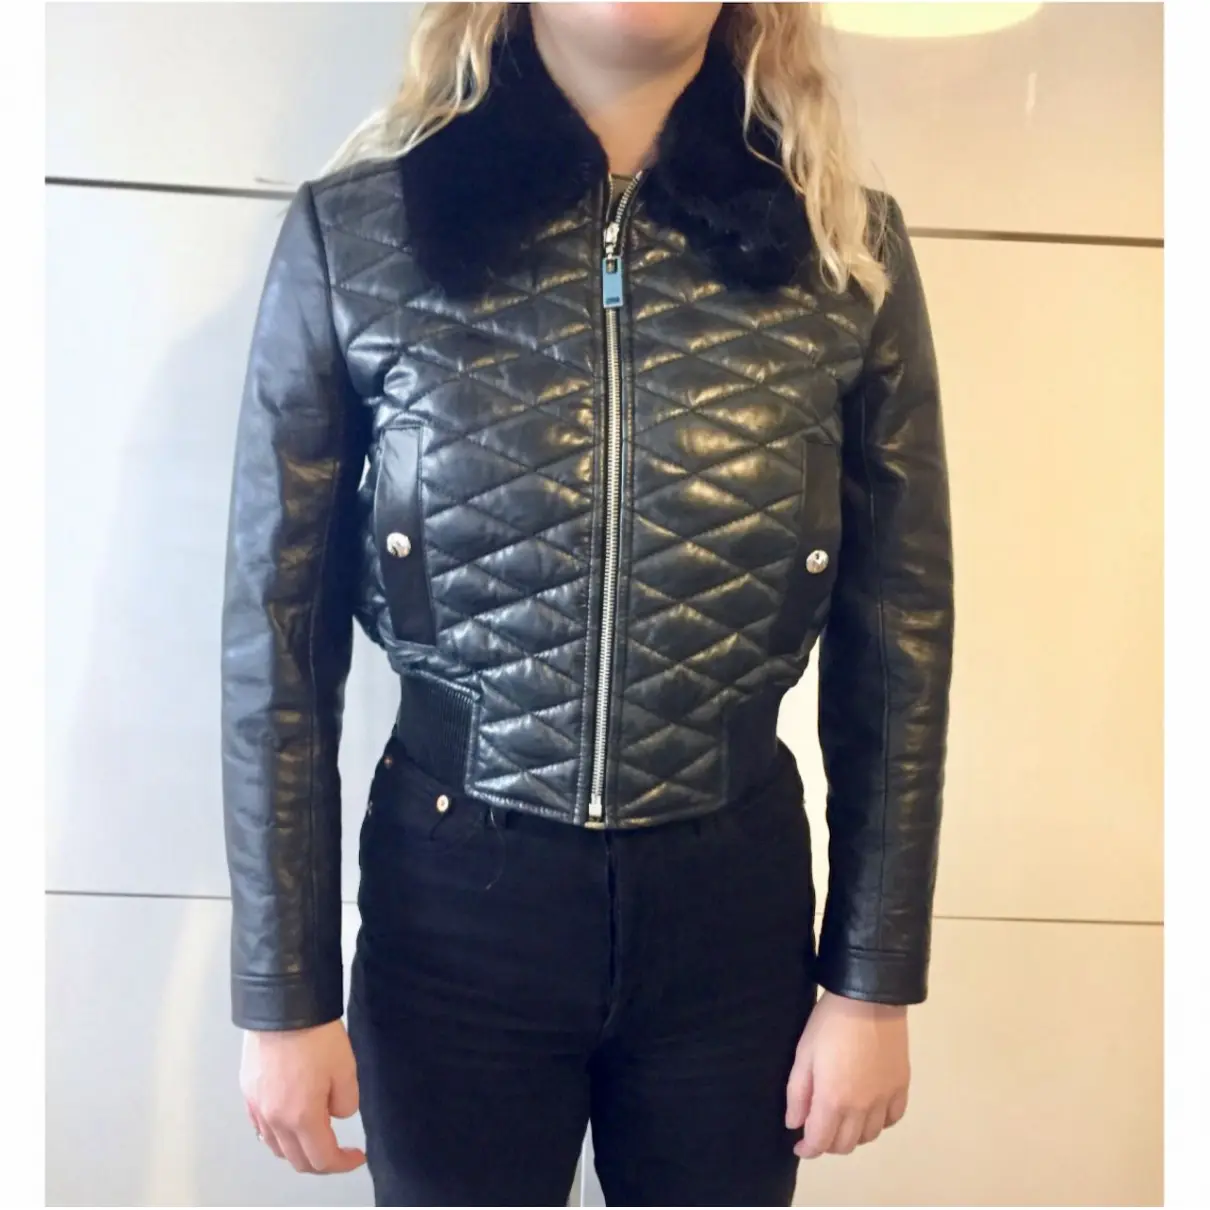 Leather biker jacket Louis Vuitton